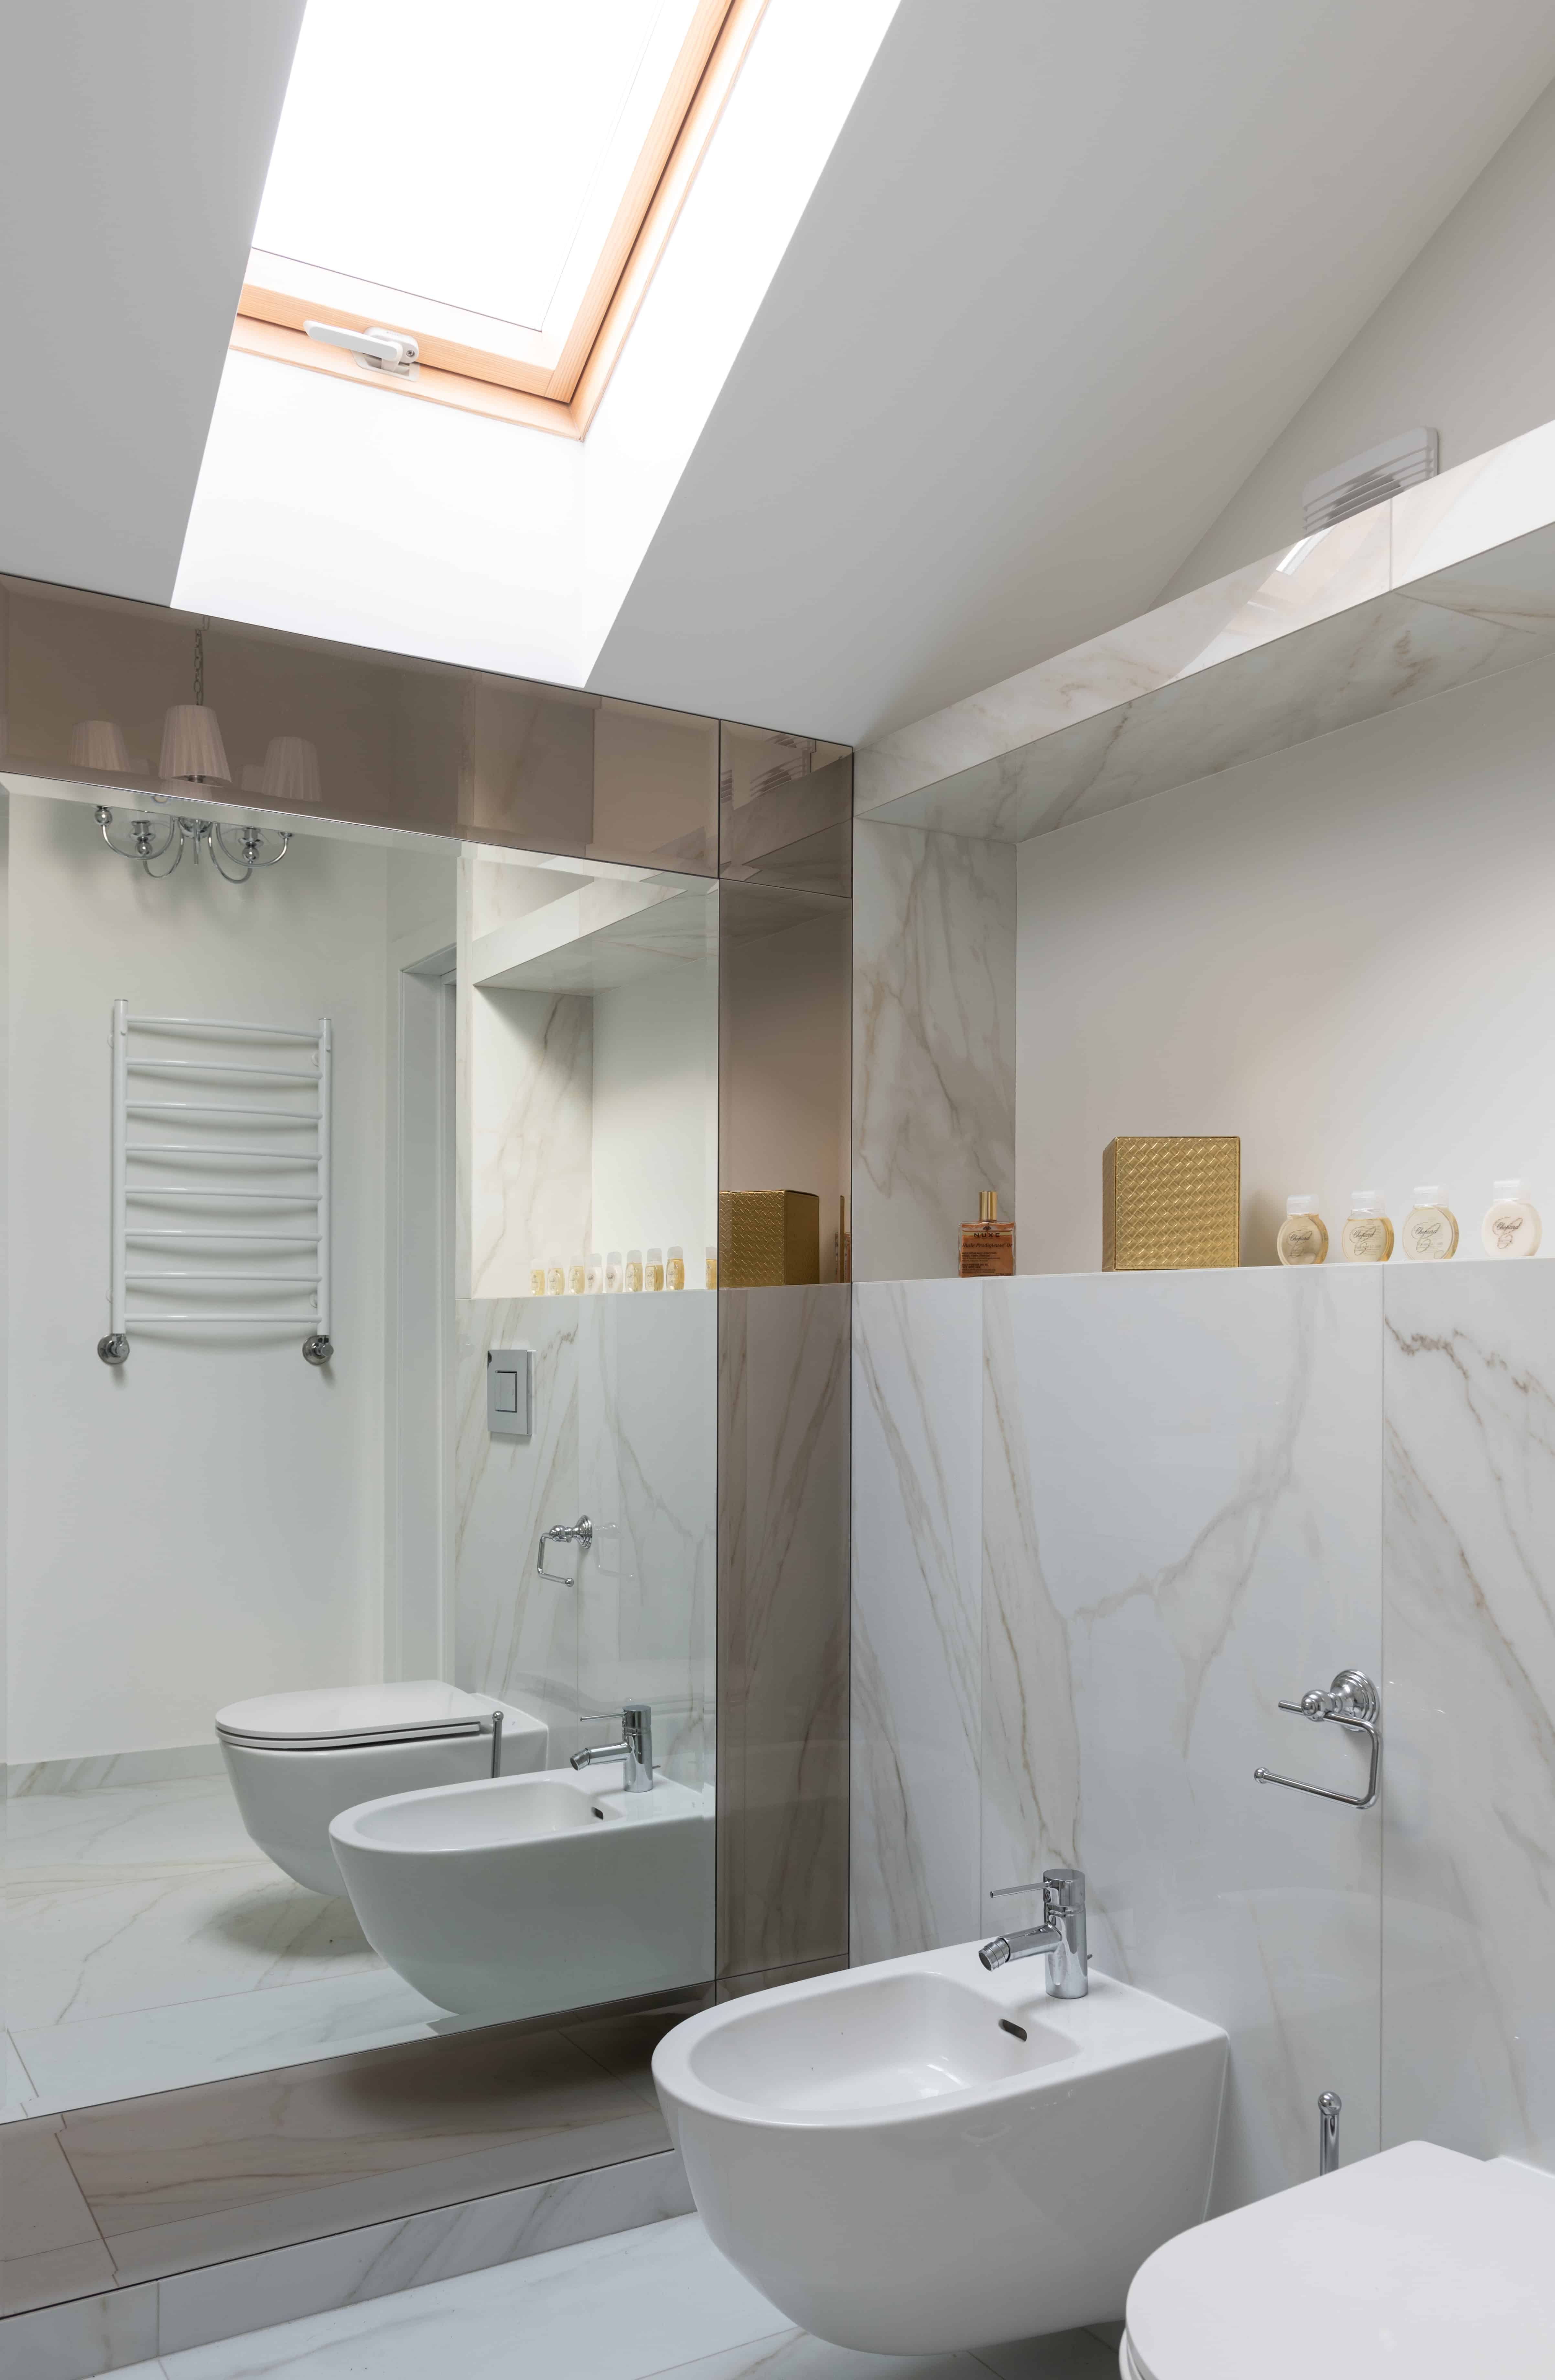 Toilet paper alternative: A white bidet fixture next to a toilet in a white marble bathroom.